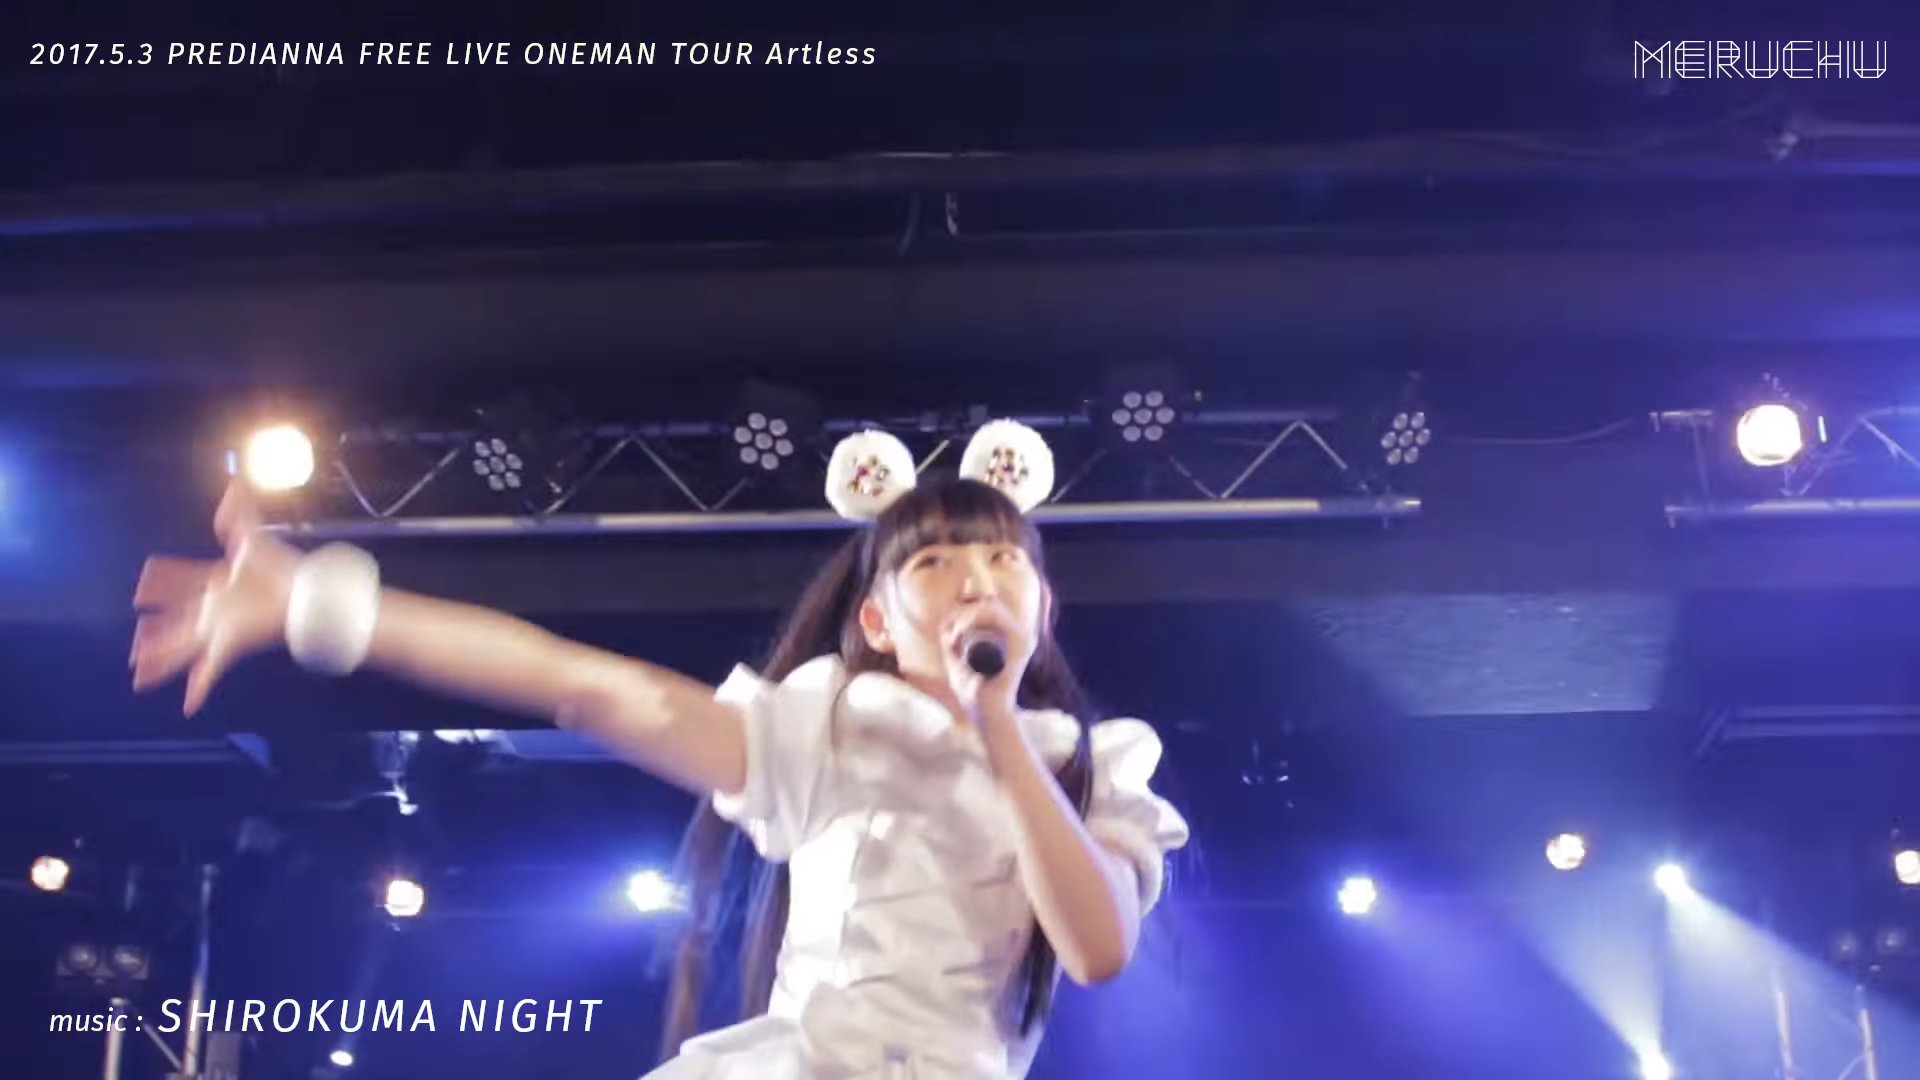 MERUCHU - SHIROKUMA NIGHT en PREDIANNA FREE LIVE ONEMAN TOUR "Artless"